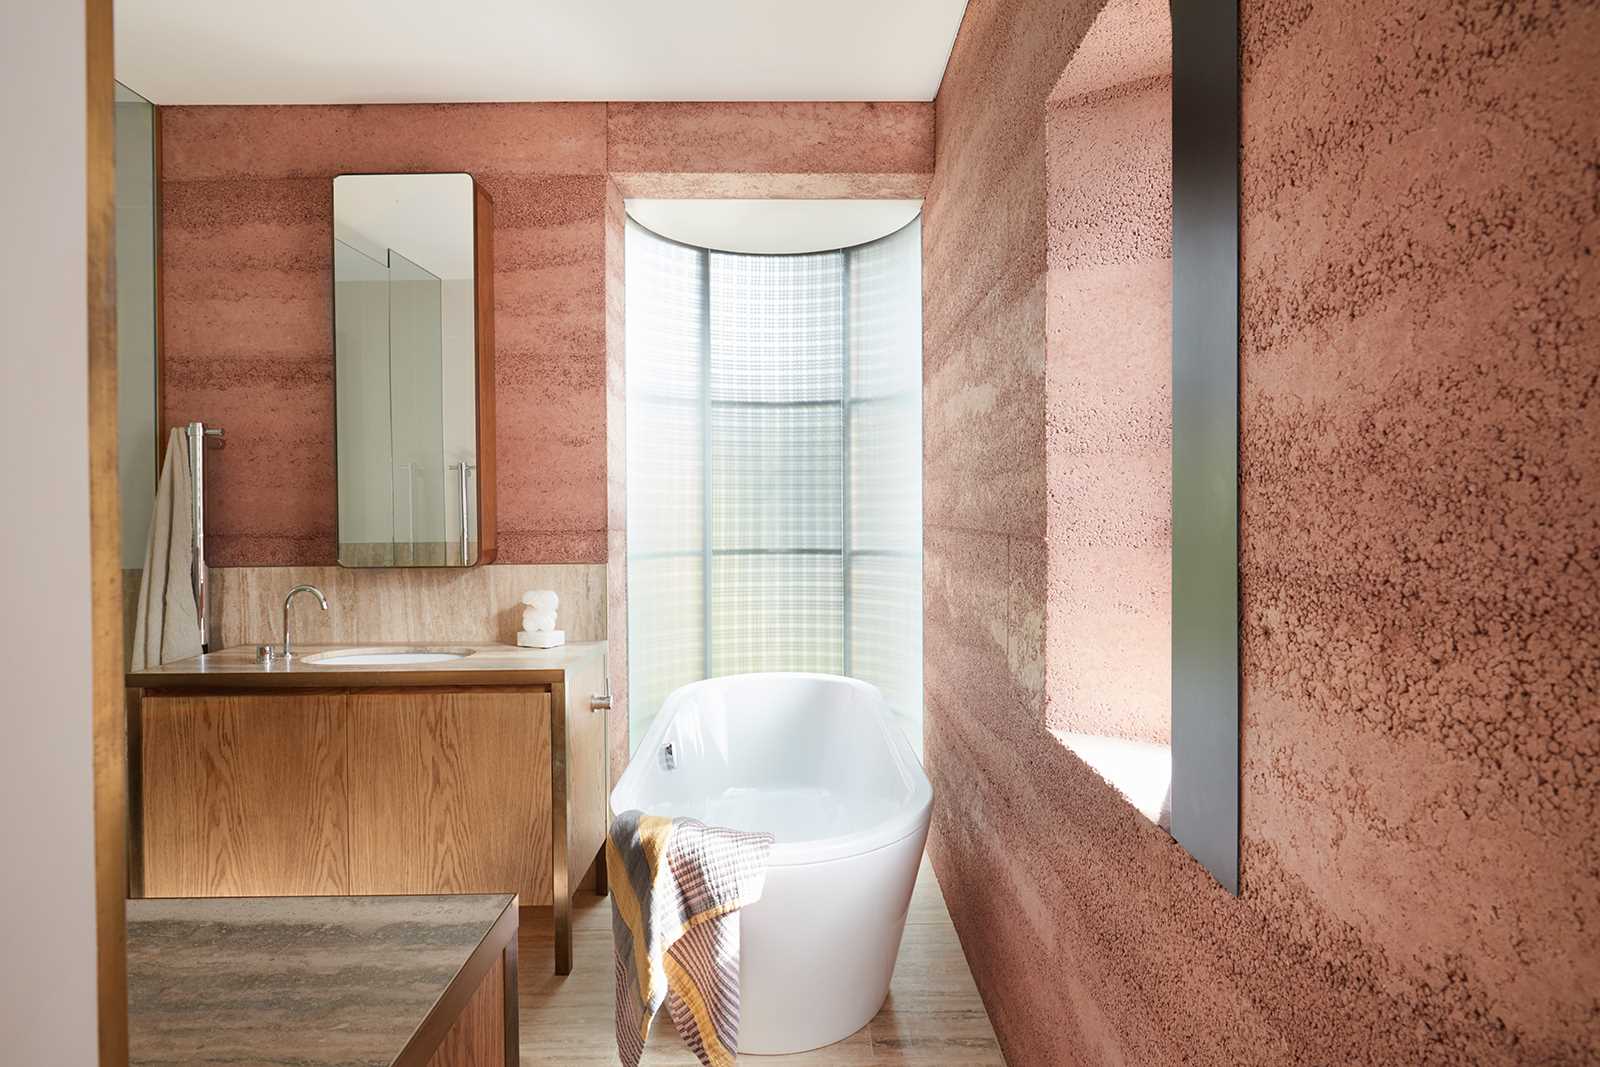 A modern bathroom with rammed earth walls.